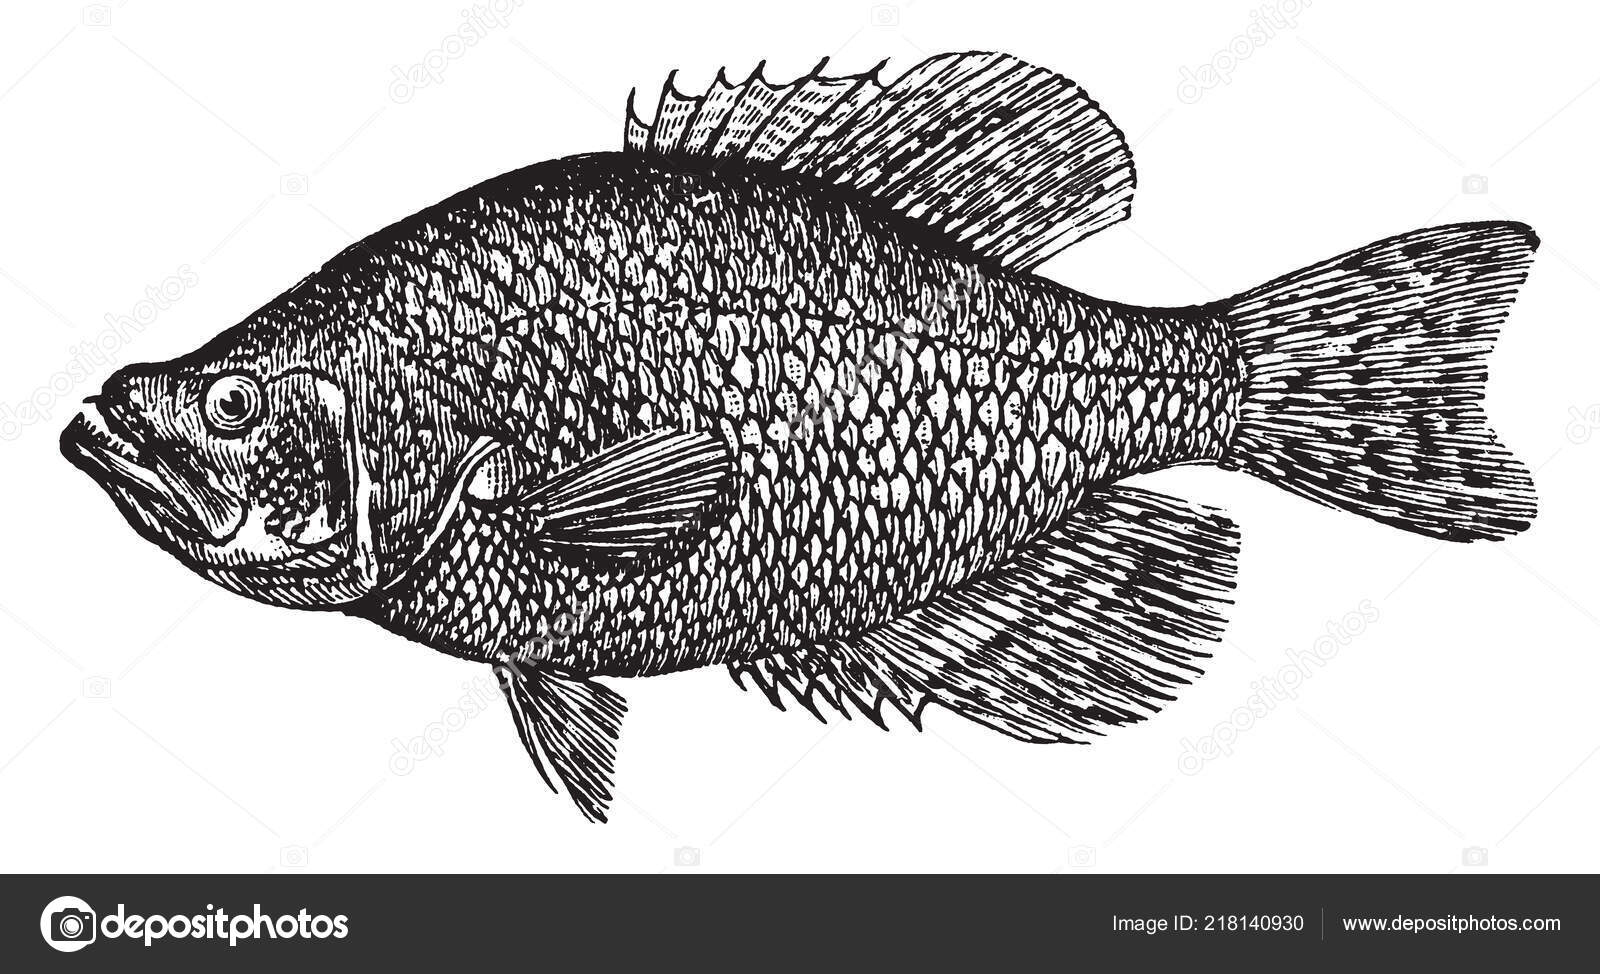 https://st4.depositphotos.com/1041725/21814/v/1600/depositphotos_218140930-stock-illustration-crappie-sunfish-vintage-line-drawing.jpg